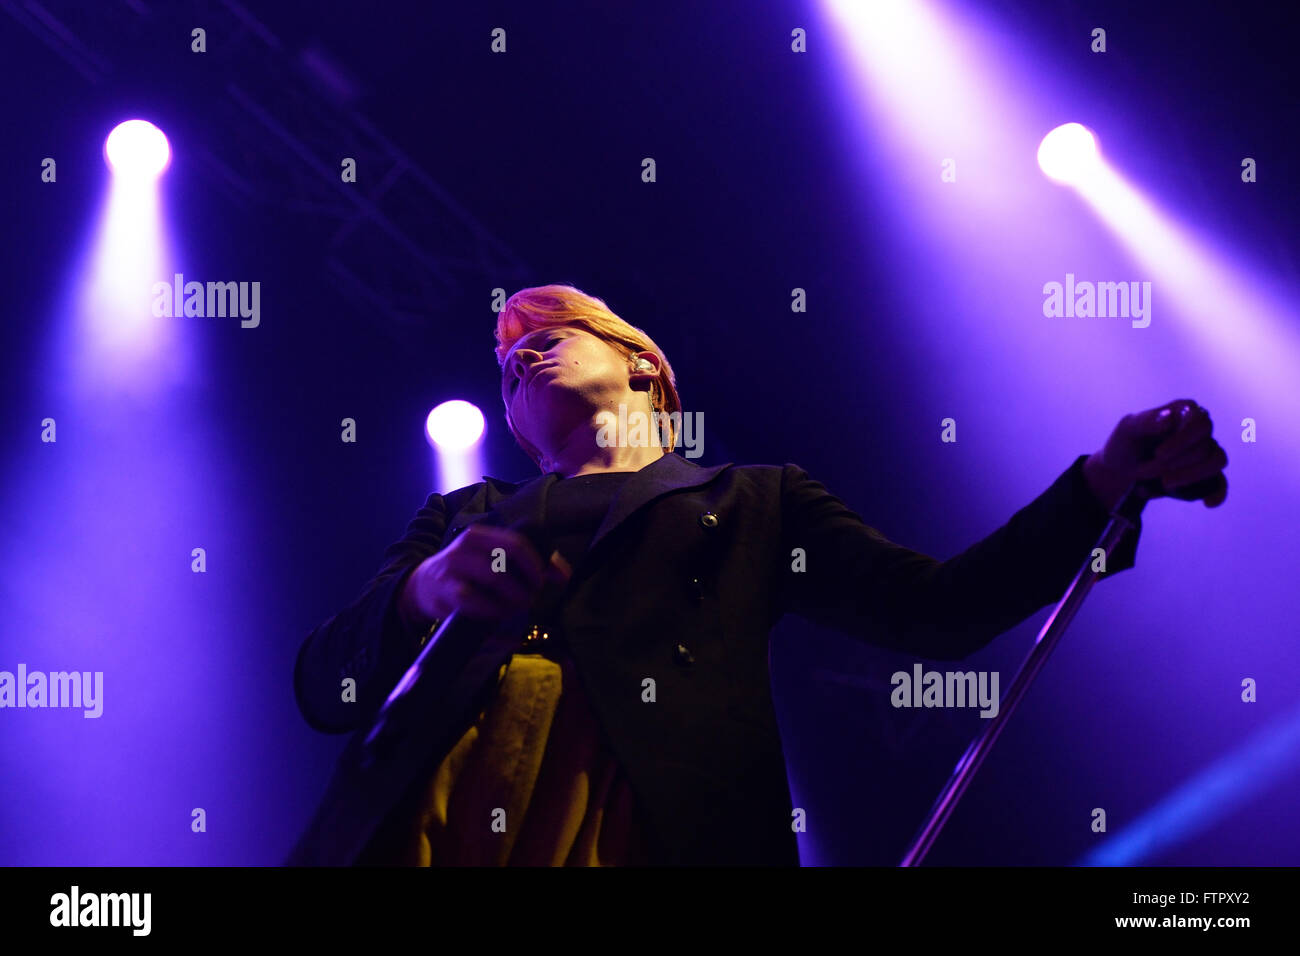 BILBAO, SPAIN - NOV 01: La Roux (band) live music show at Bime Festival on November 01, 2014 in Bilbao, Spain. Stock Photo